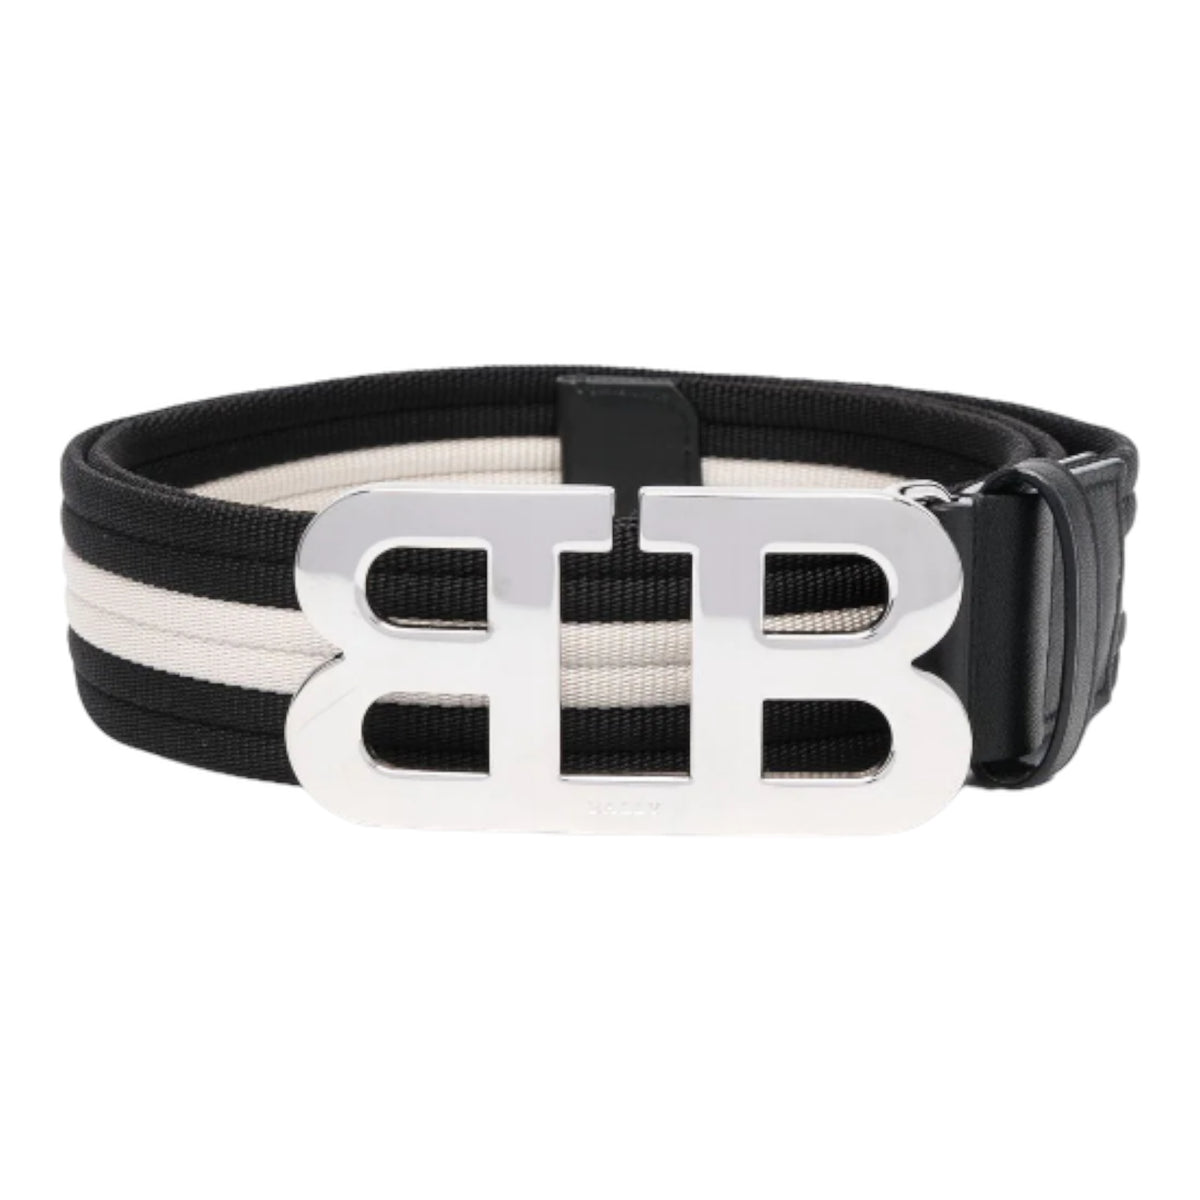 Bally Men's Mirror B Logo Striped Belt